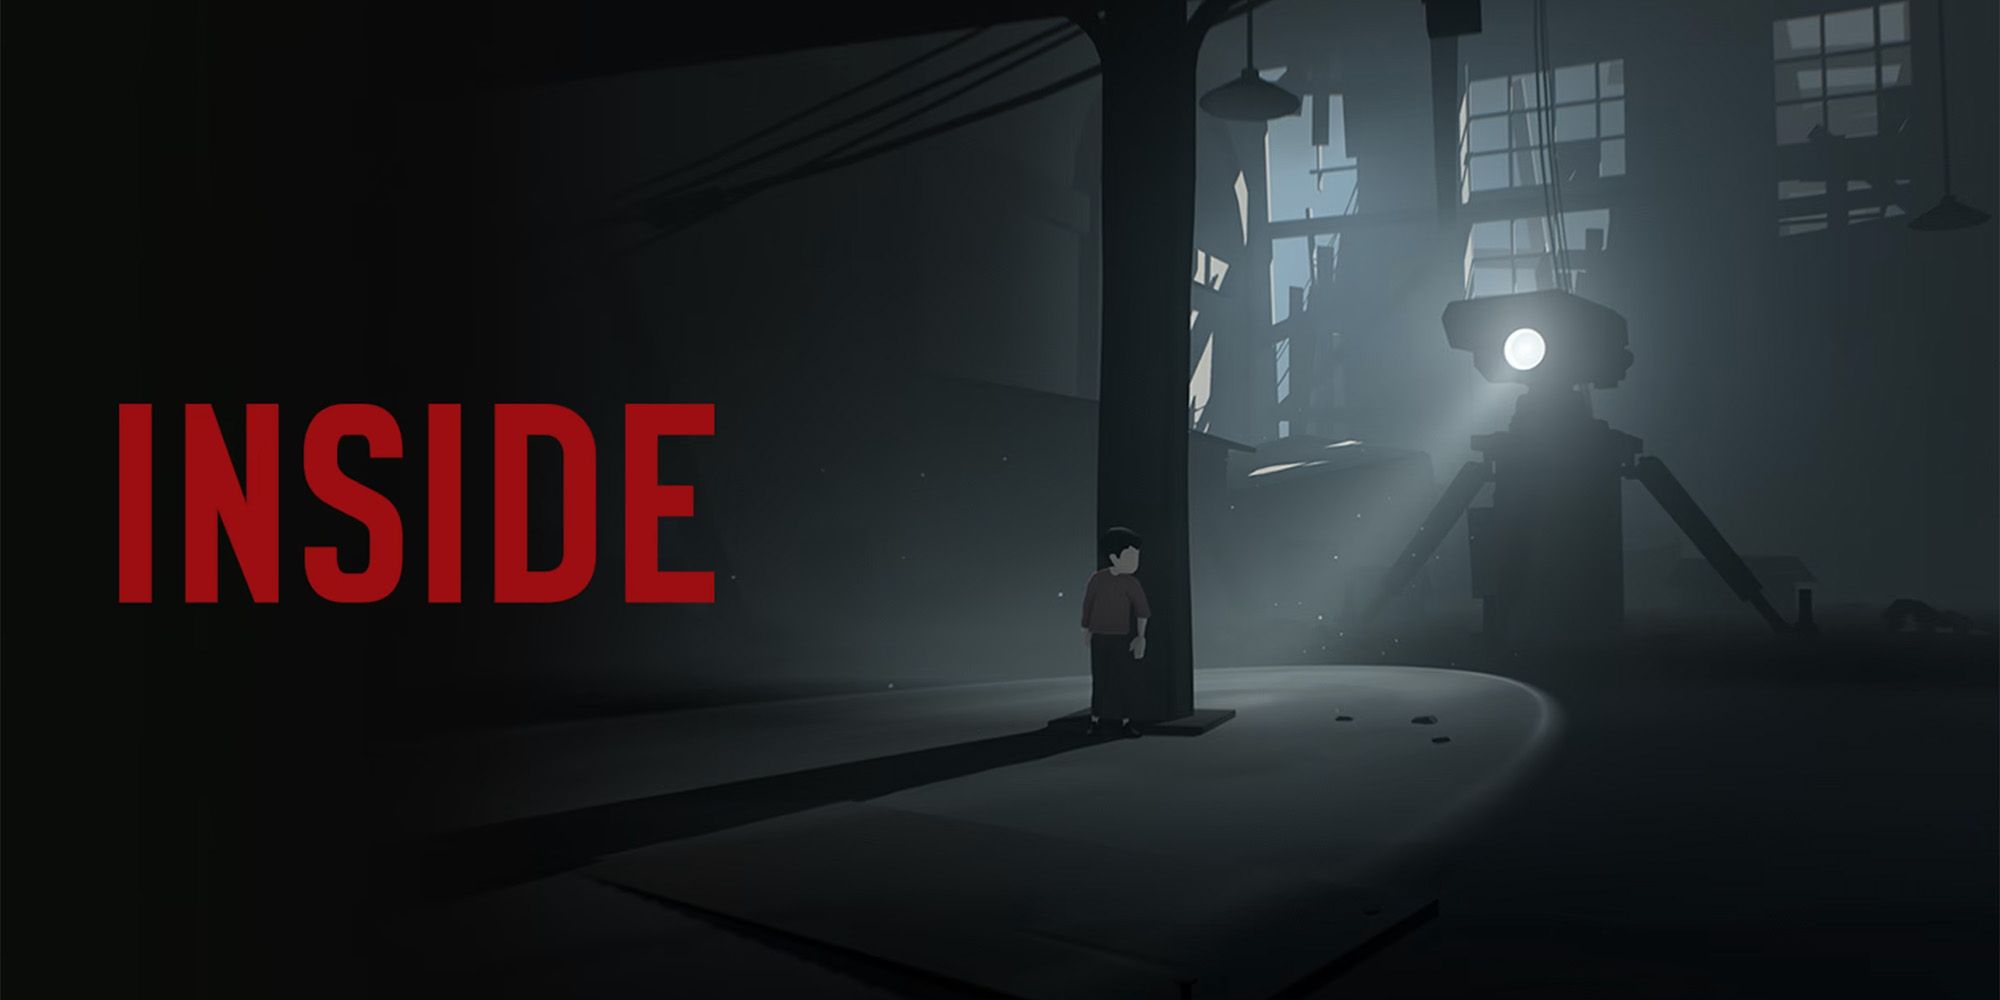 Inside - A Boy Hides From A Robot In A Dark Warehouse